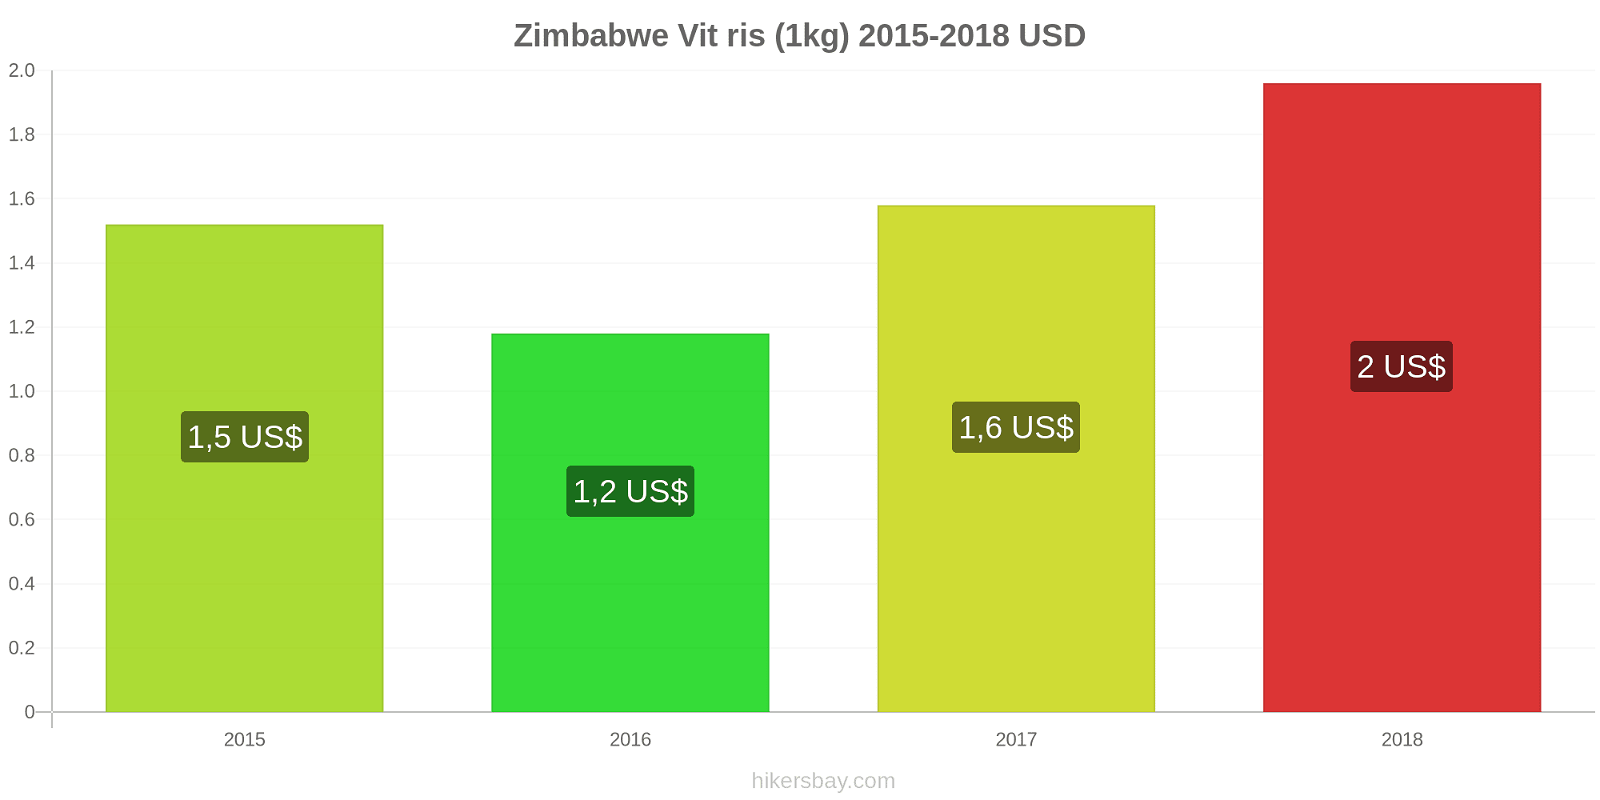 Zimbabwe prisändringar Kilo vitt ris hikersbay.com